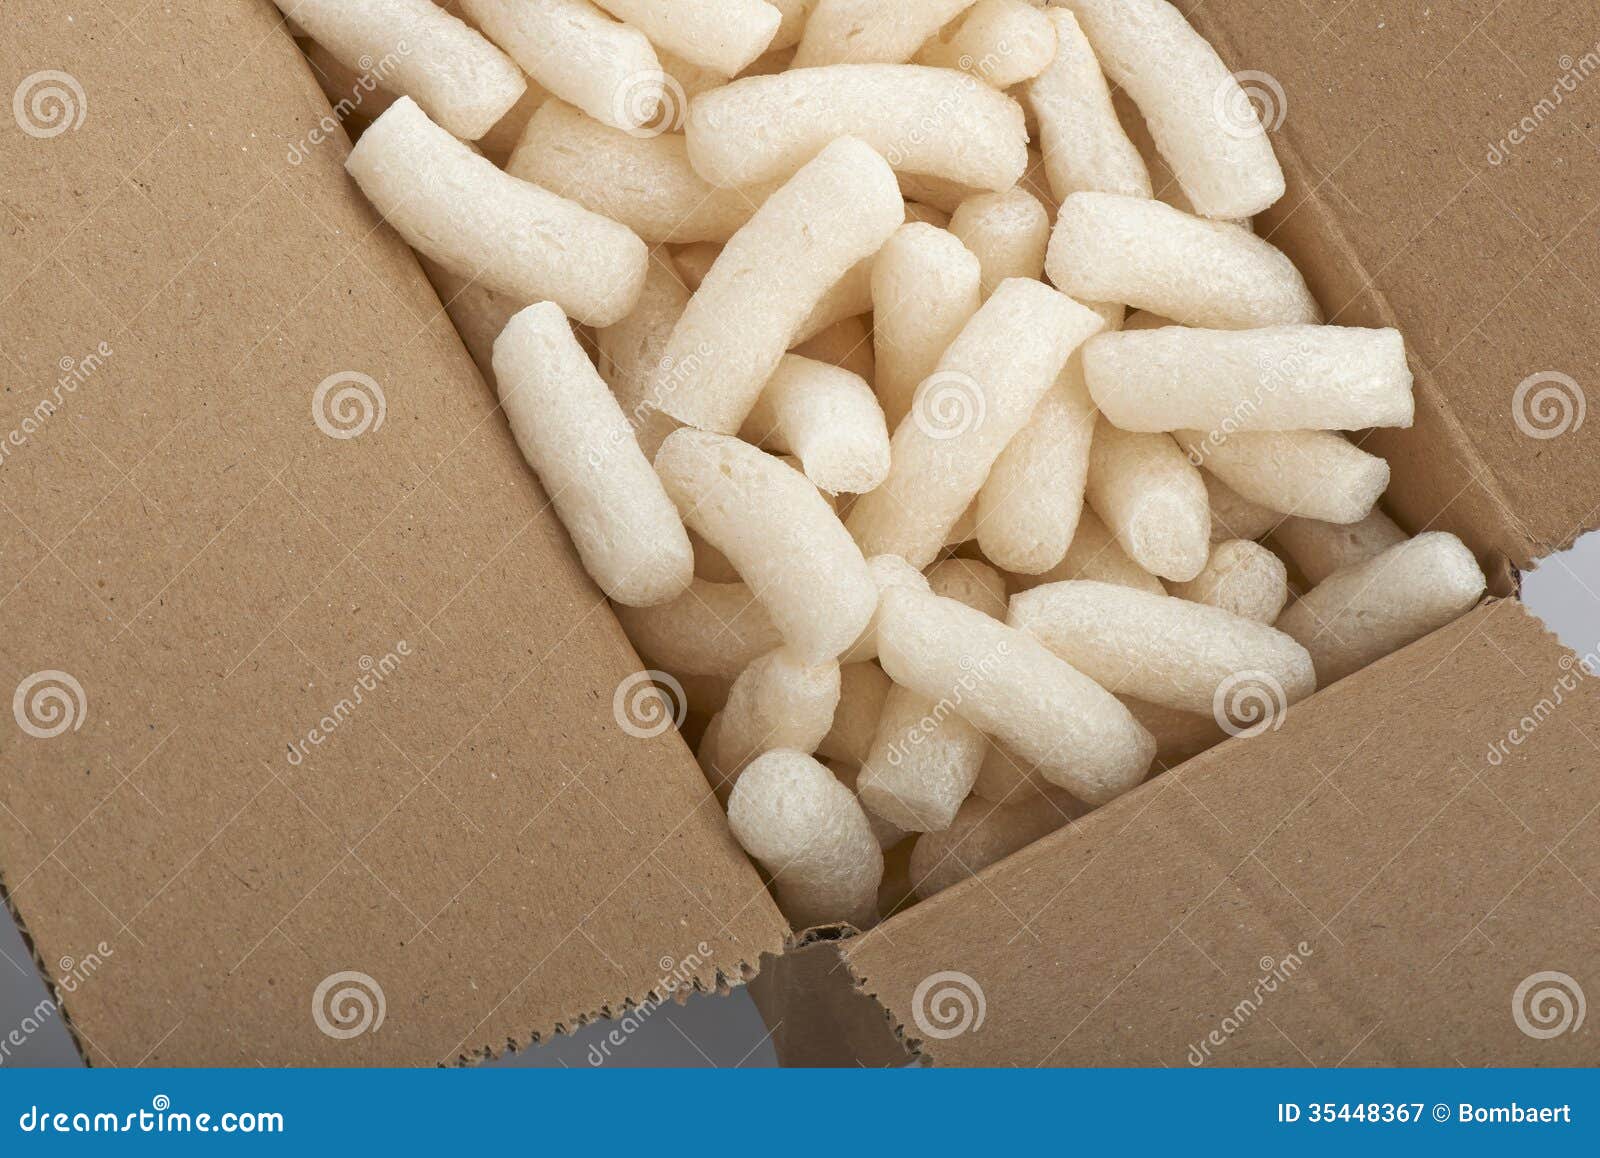 Cardboard Box With Yellow Packing Styrofoam Peanuts Royalty Free Stock Photography ...1300 x 958